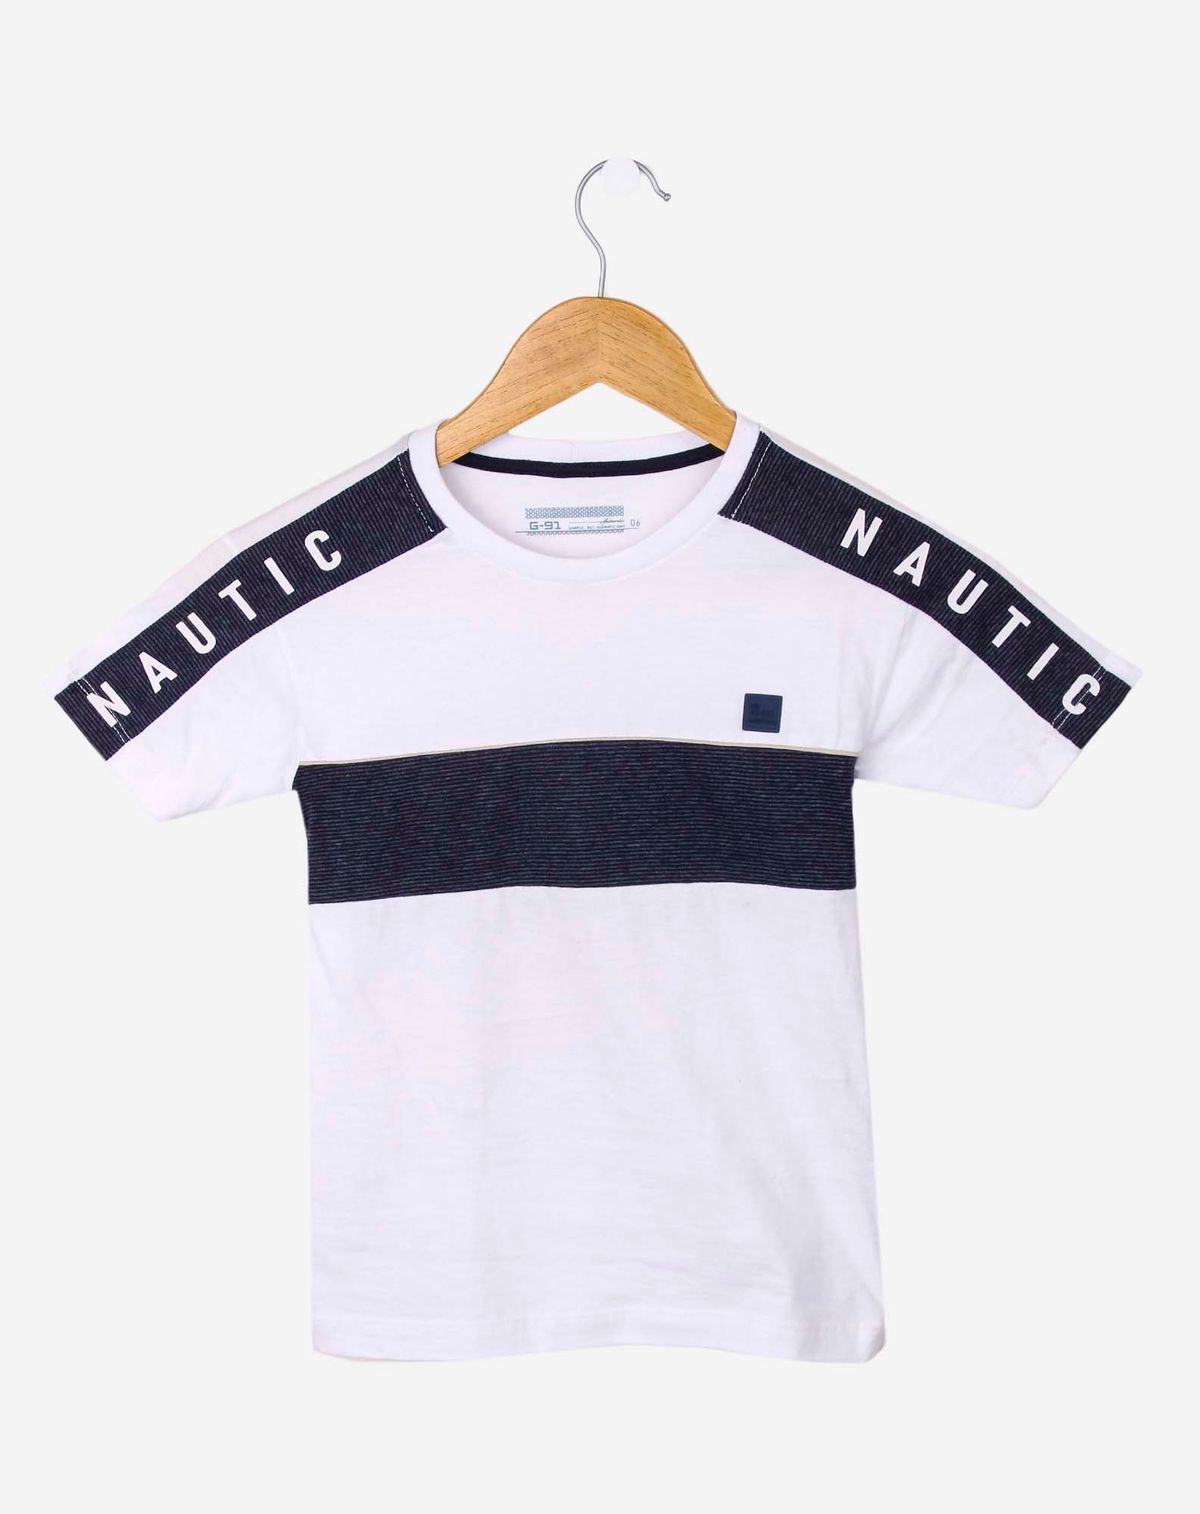 673003002-camiseta-manga-curta-infantil-menino-recortes-nautic-branco-6-8e8